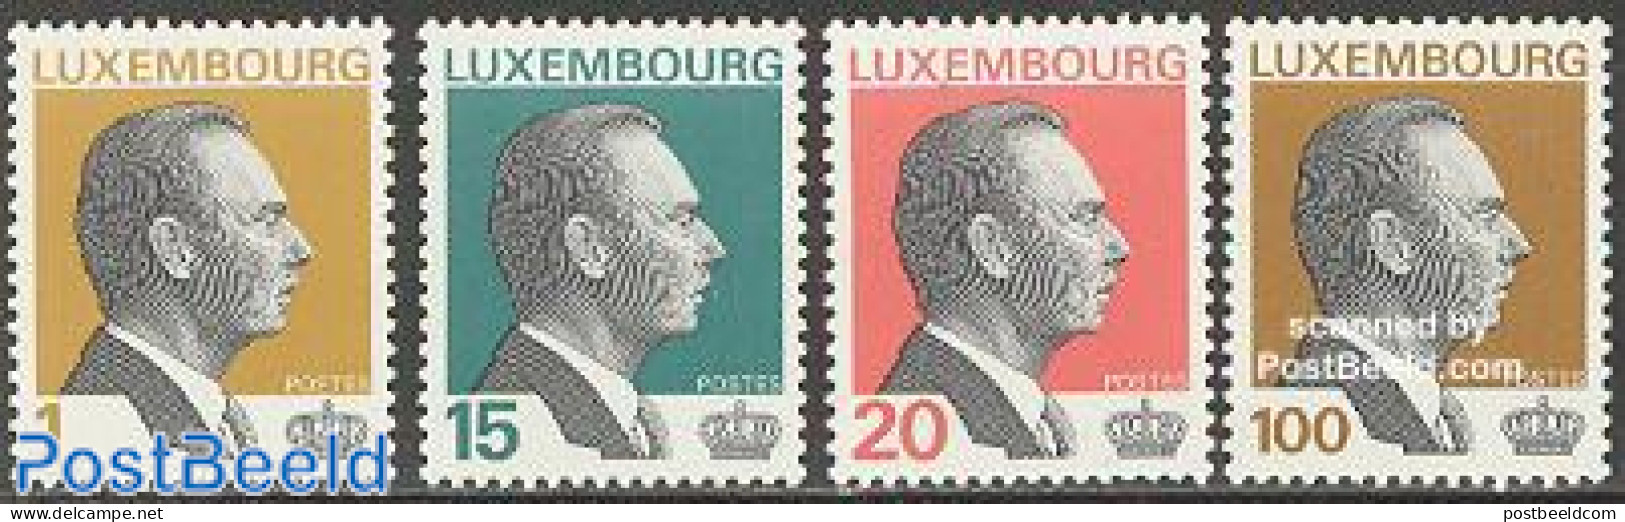 Luxemburg 1994 Definitives 4v, Mint NH - Ungebraucht